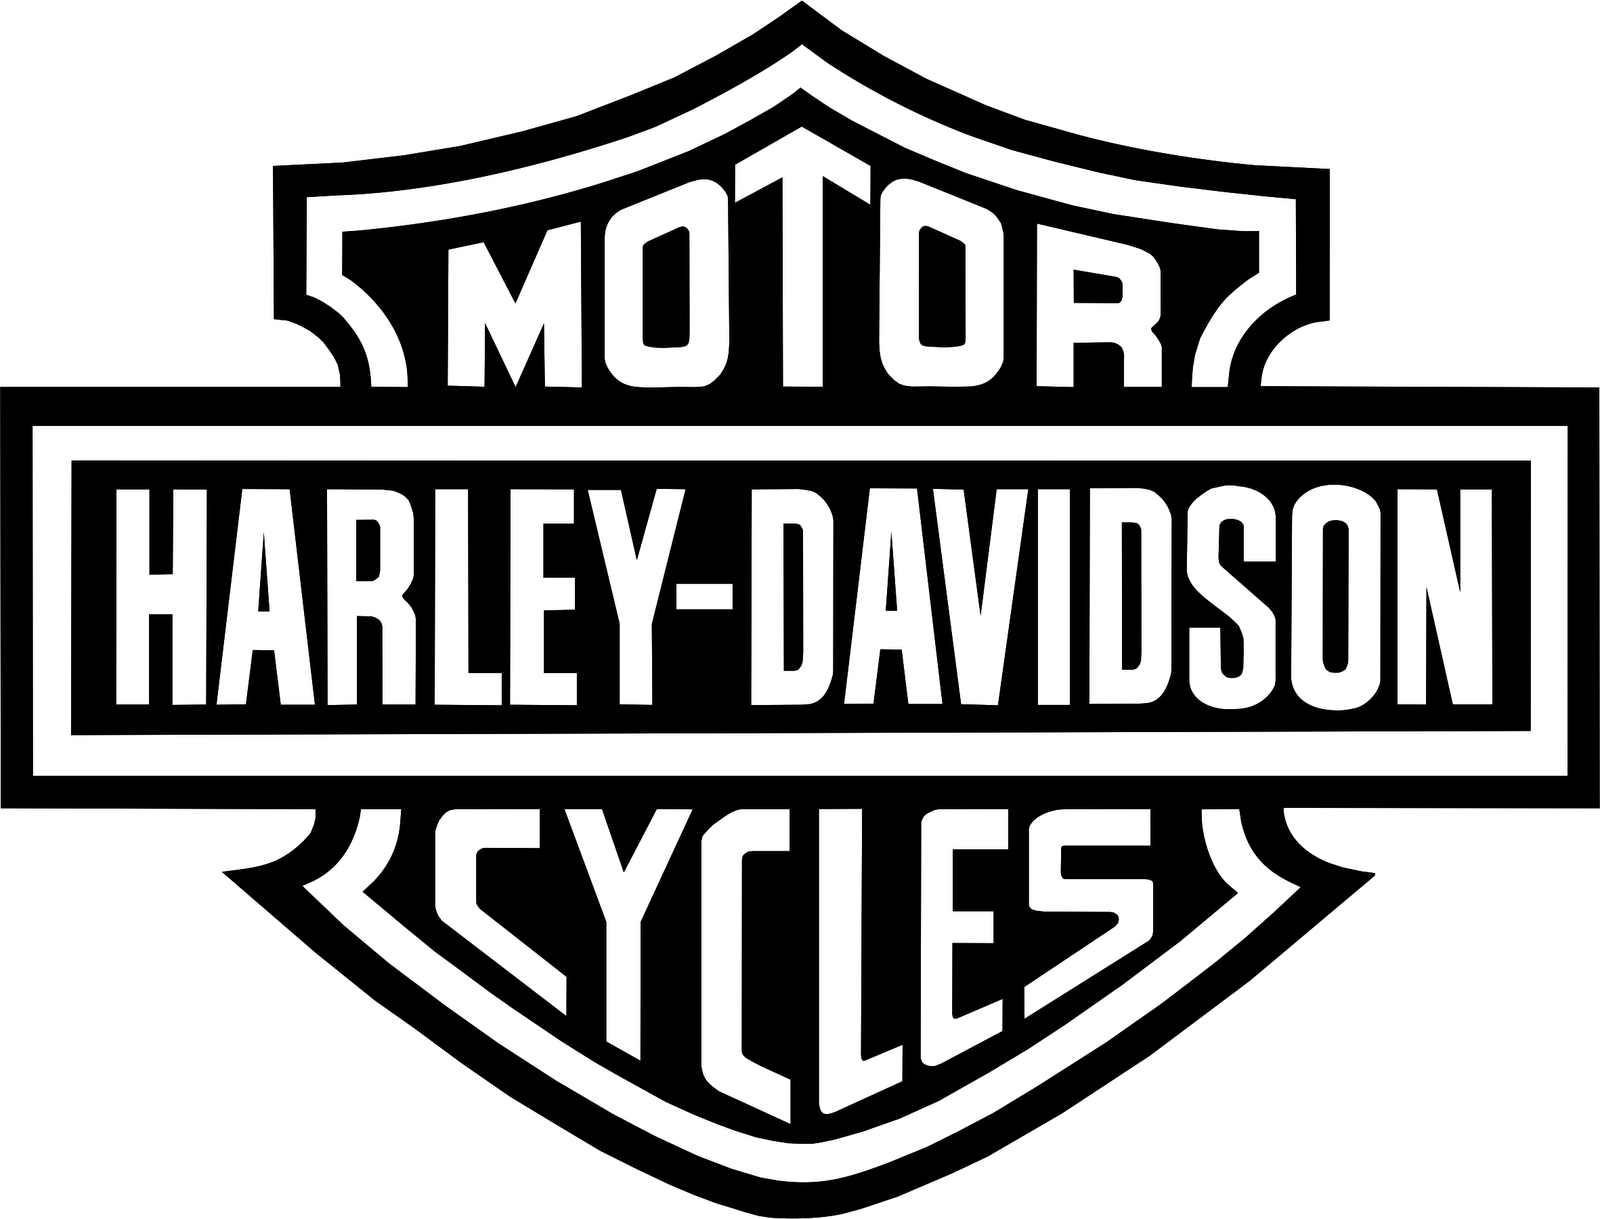 Black and White Harley-Davidson Logo - Harley davidson logo banner black and white - RR collections